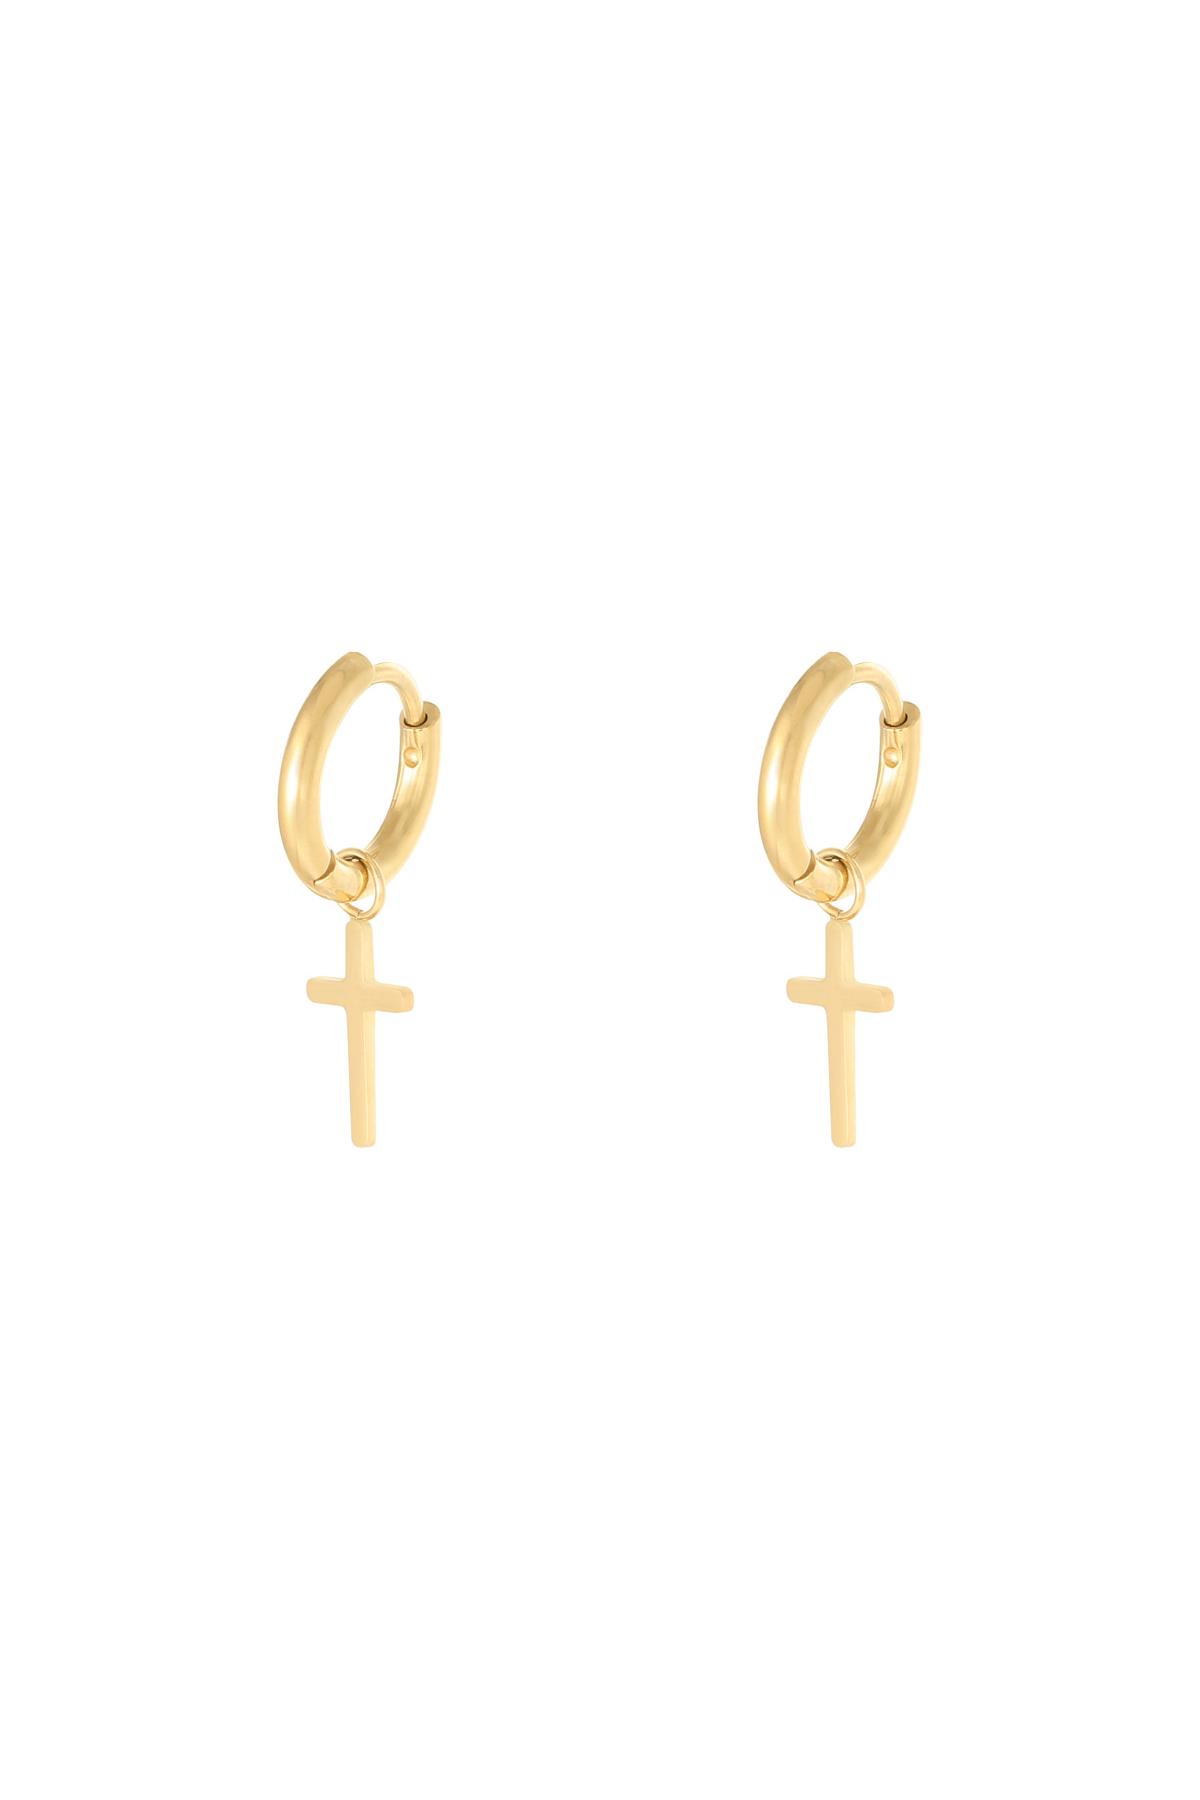 Earrings Faith Gold Stainless Steel h5 